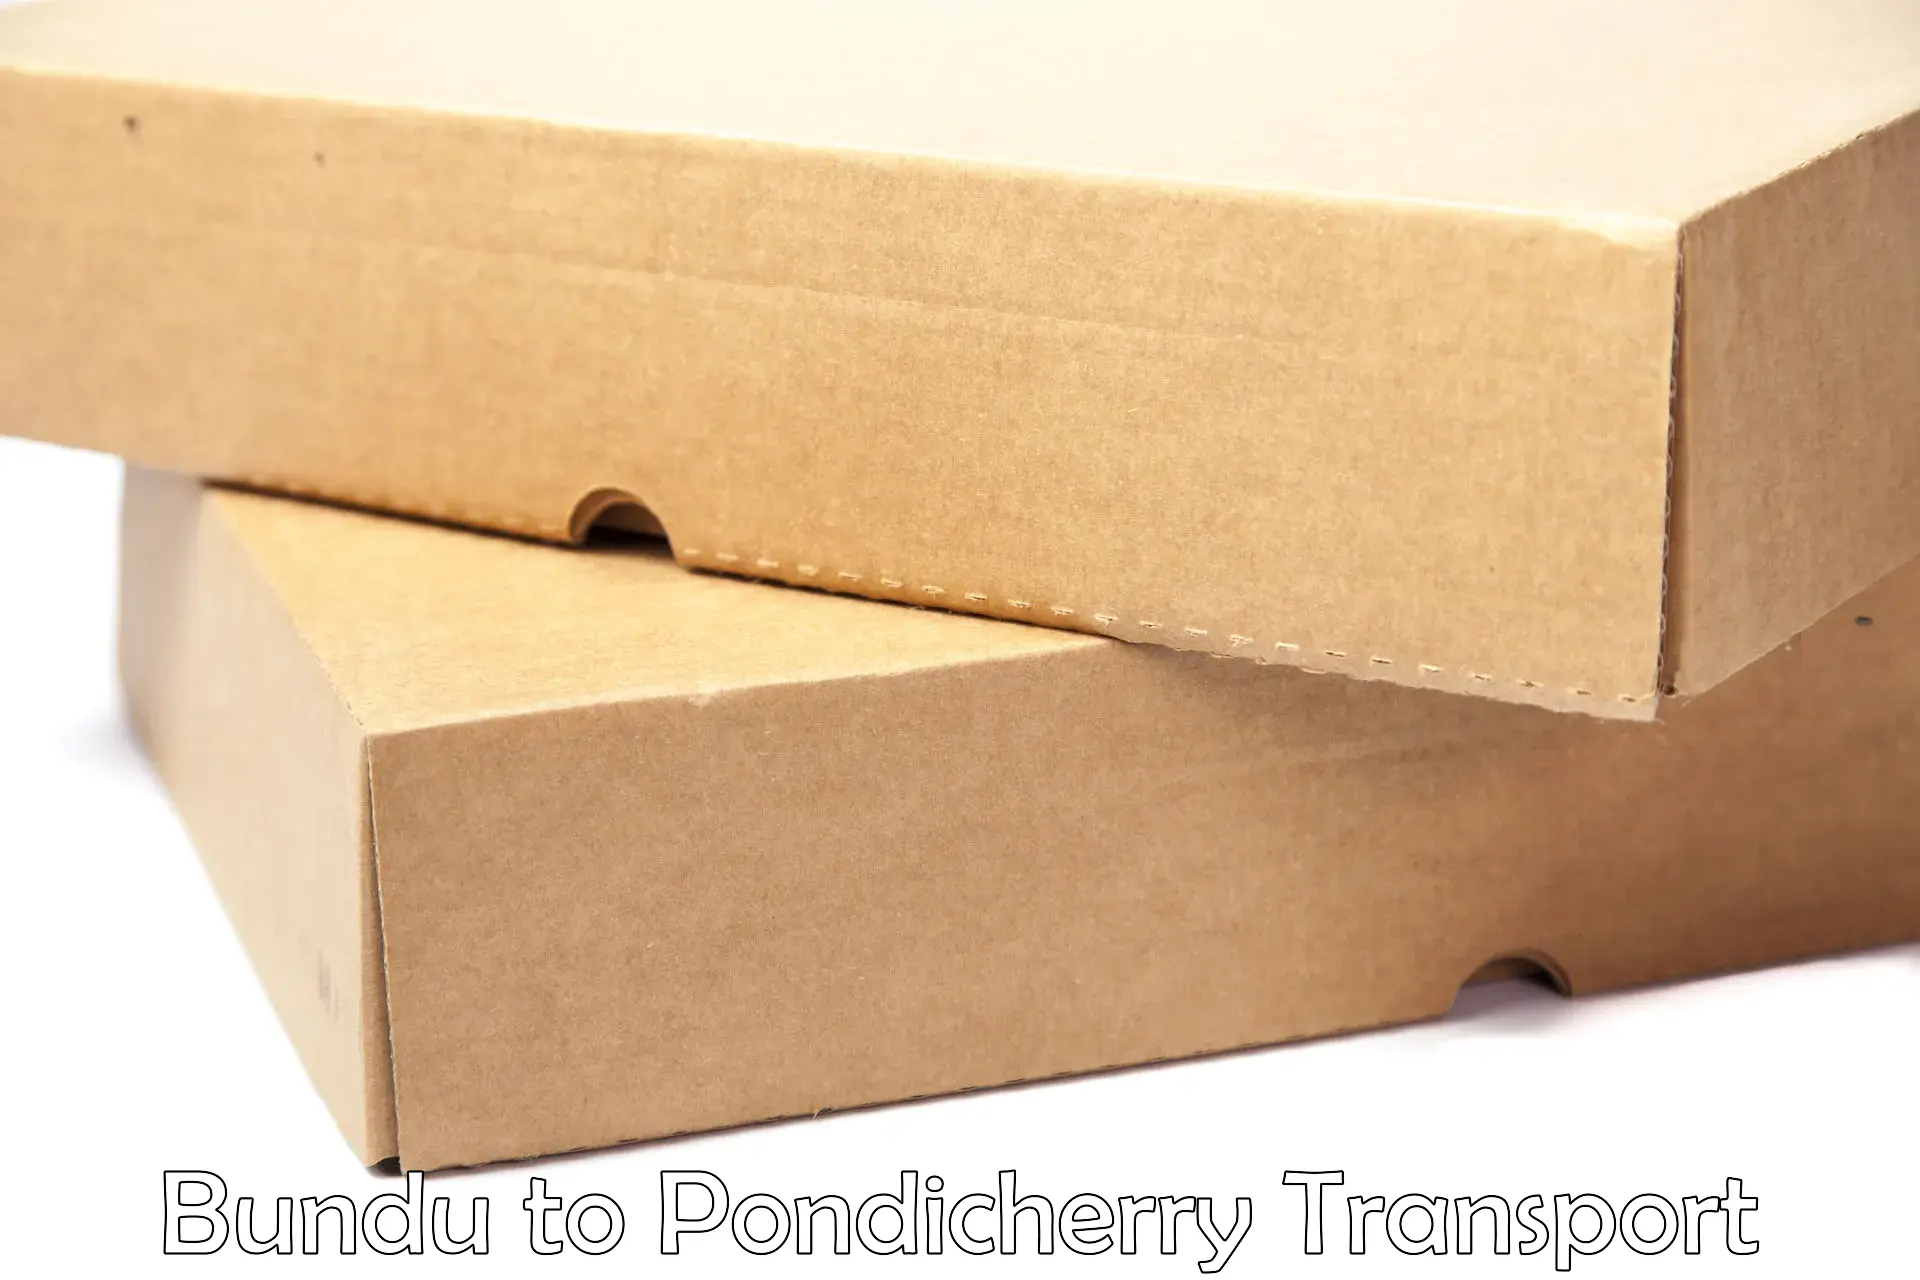 Delivery service Bundu to Pondicherry